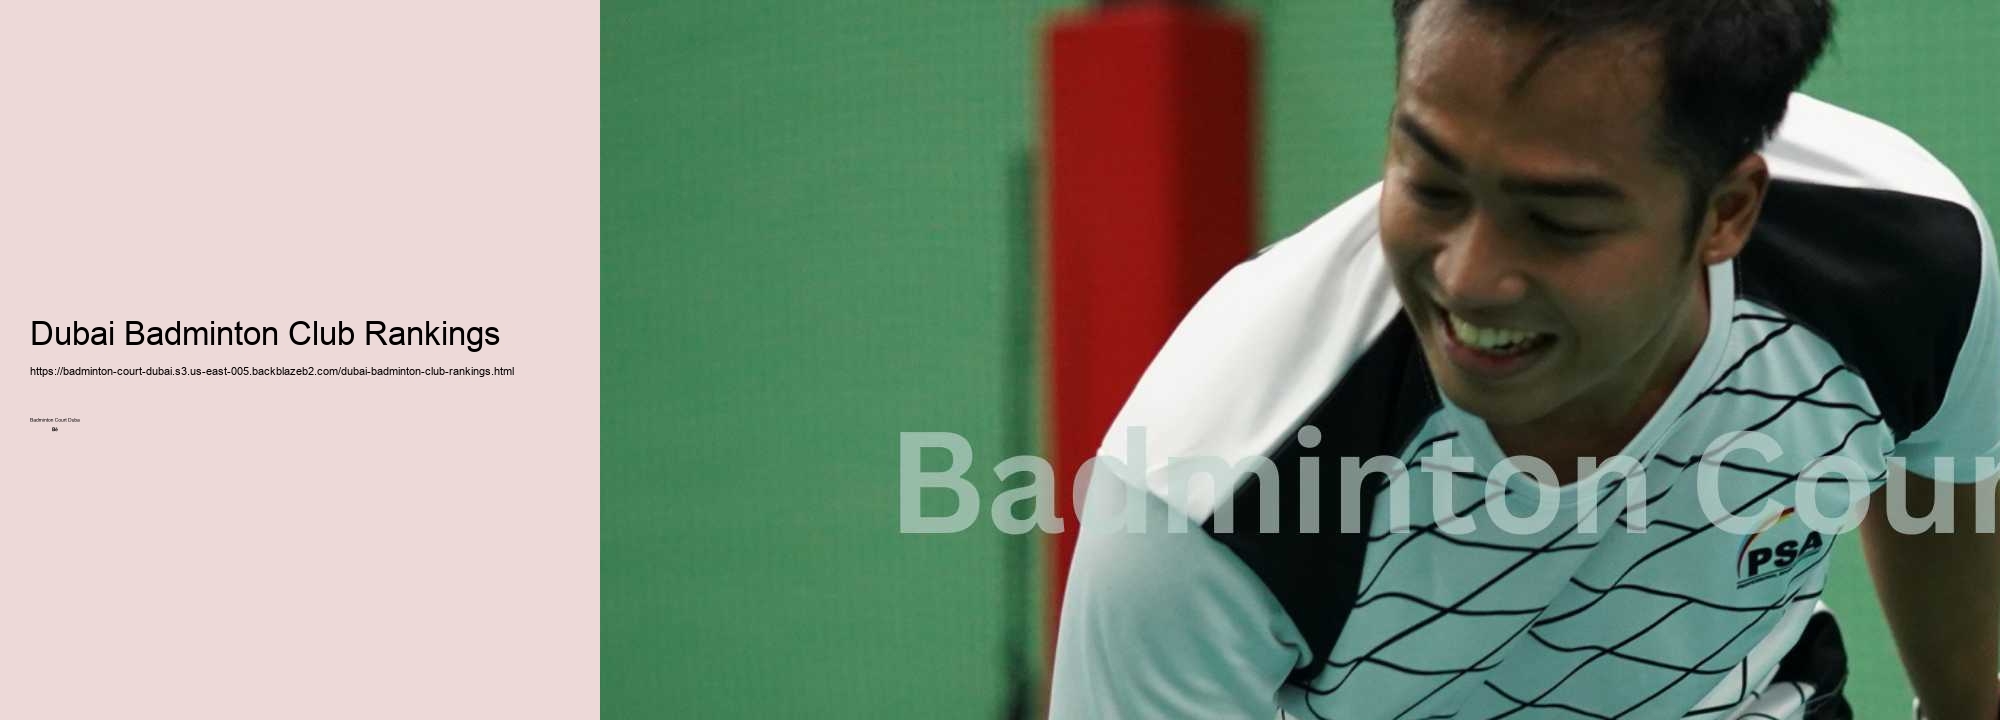 Dubai Badminton Club Rankings